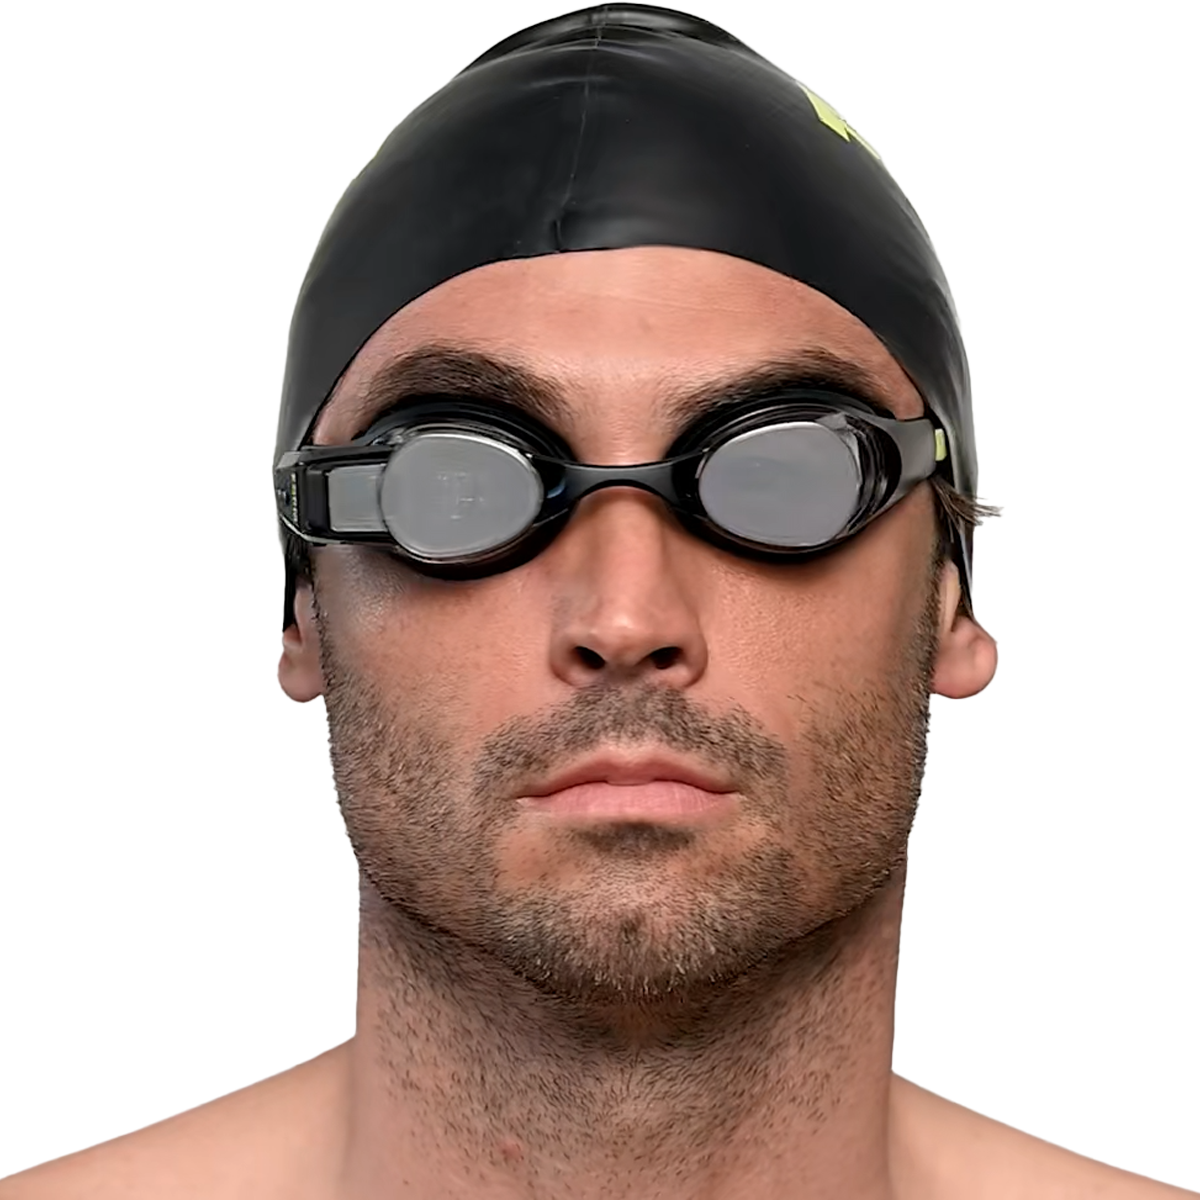 Smart Swim 2 Goggles alternate view